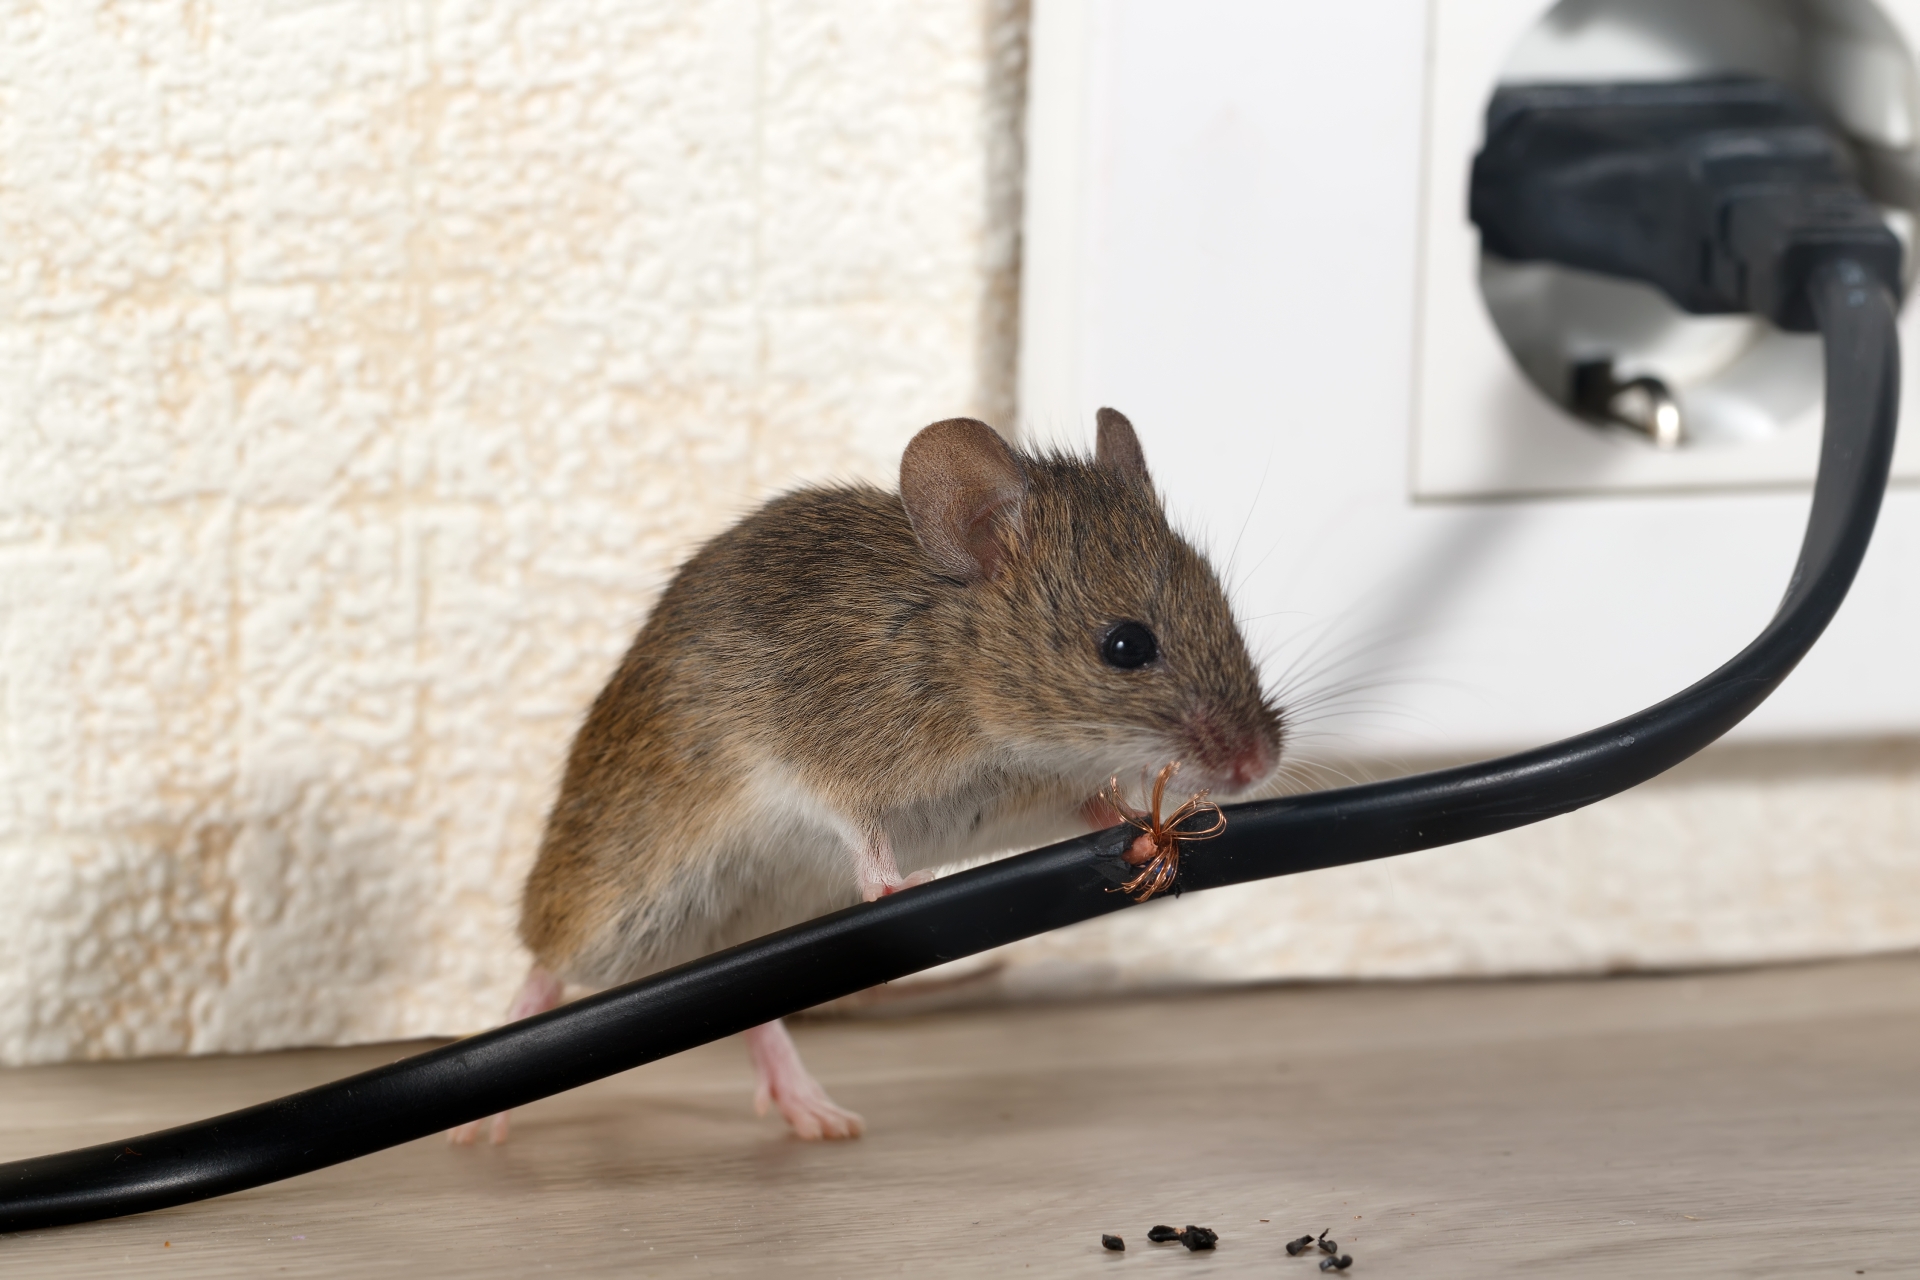 Mice Infestation, Pest Control in Epsom, Horton, Longmead, KT19. Call Now 020 8166 9746